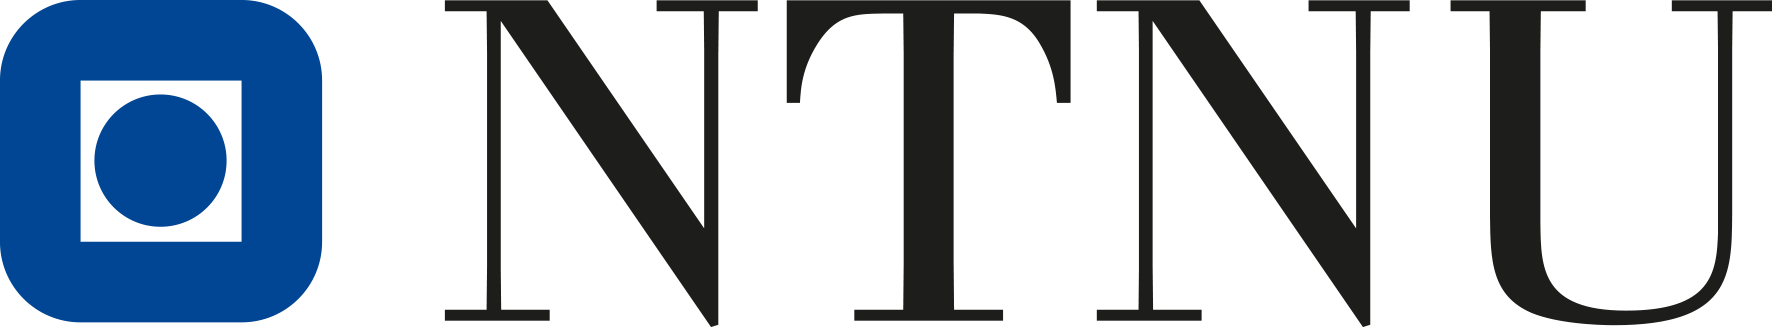 logo: Norges teknisk-naturvitenskapelige universitet – NTNU